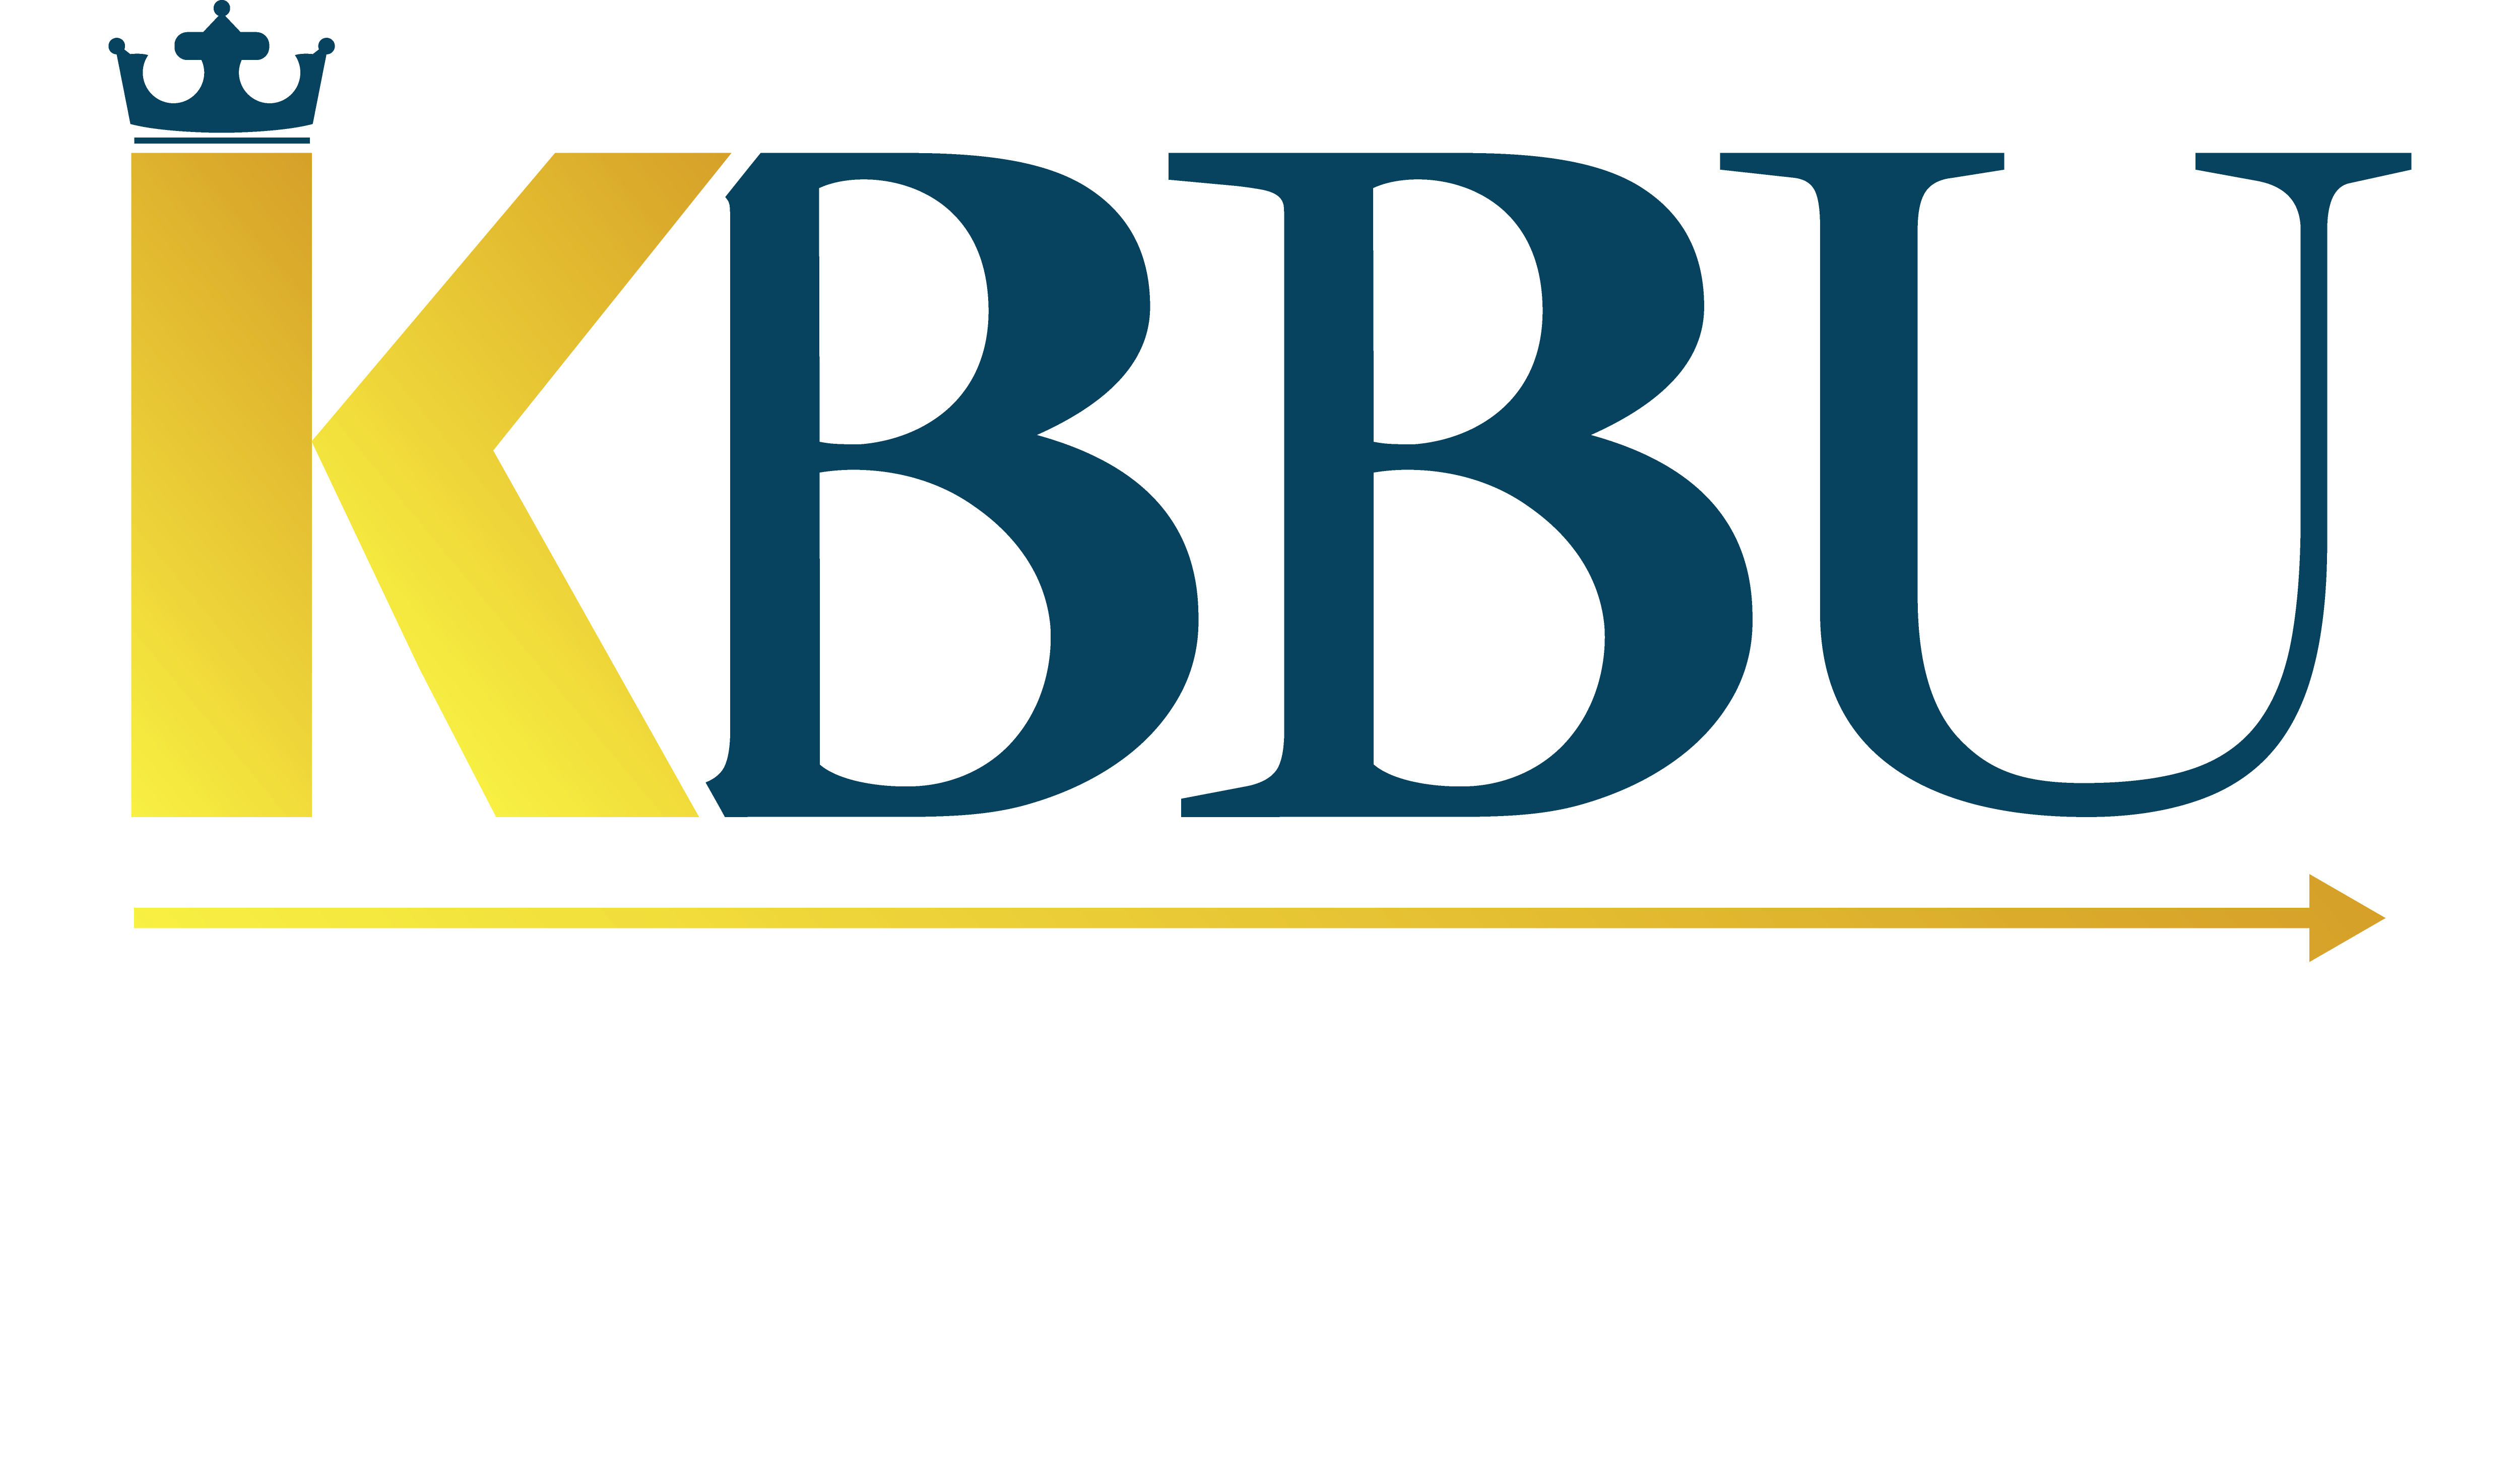 Kingdom Builders Business University